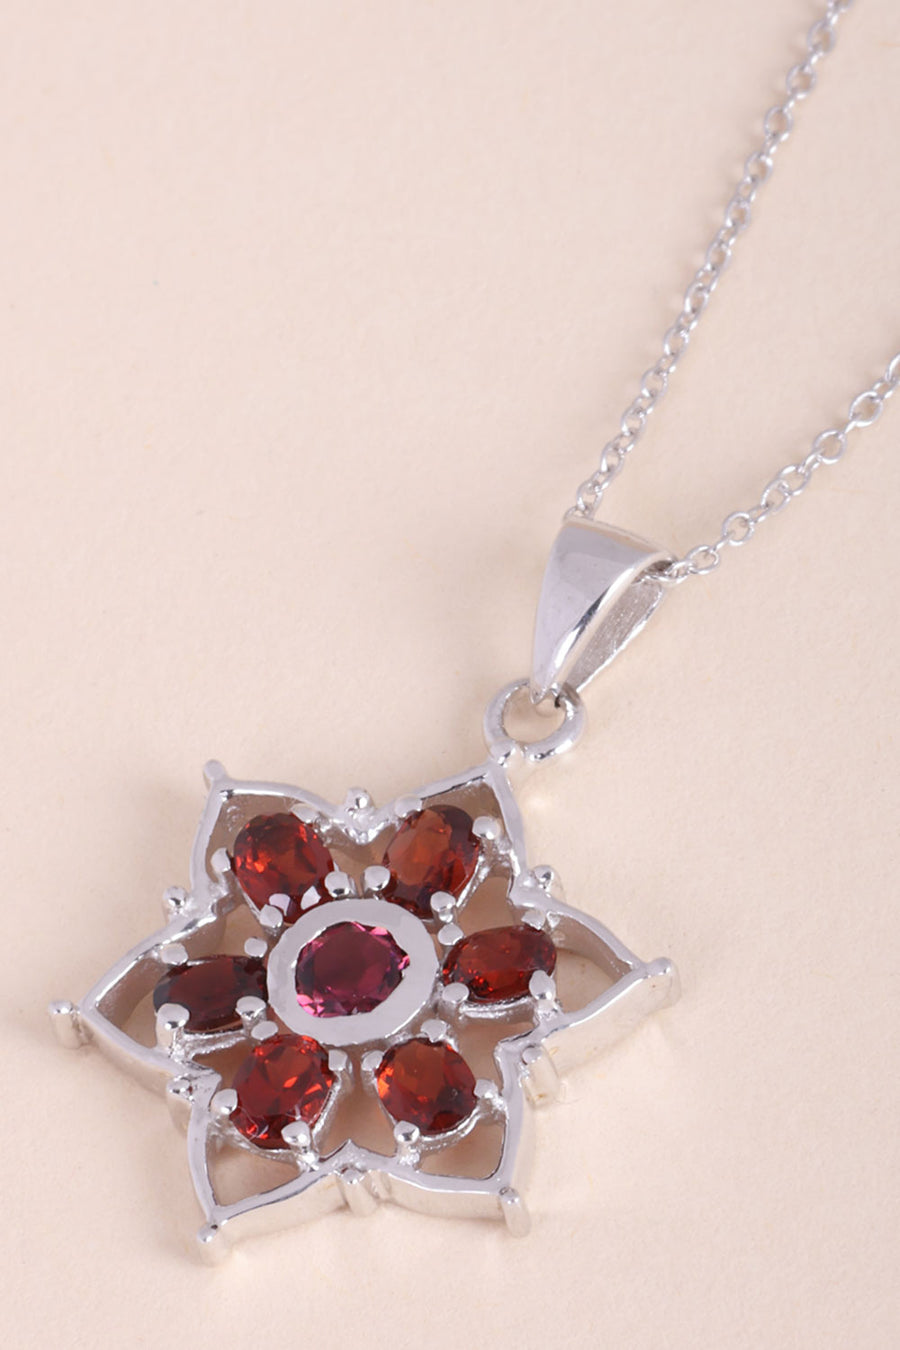 Pink Tourmaline Sterling Silver Necklace Pendant Chain - Avishya